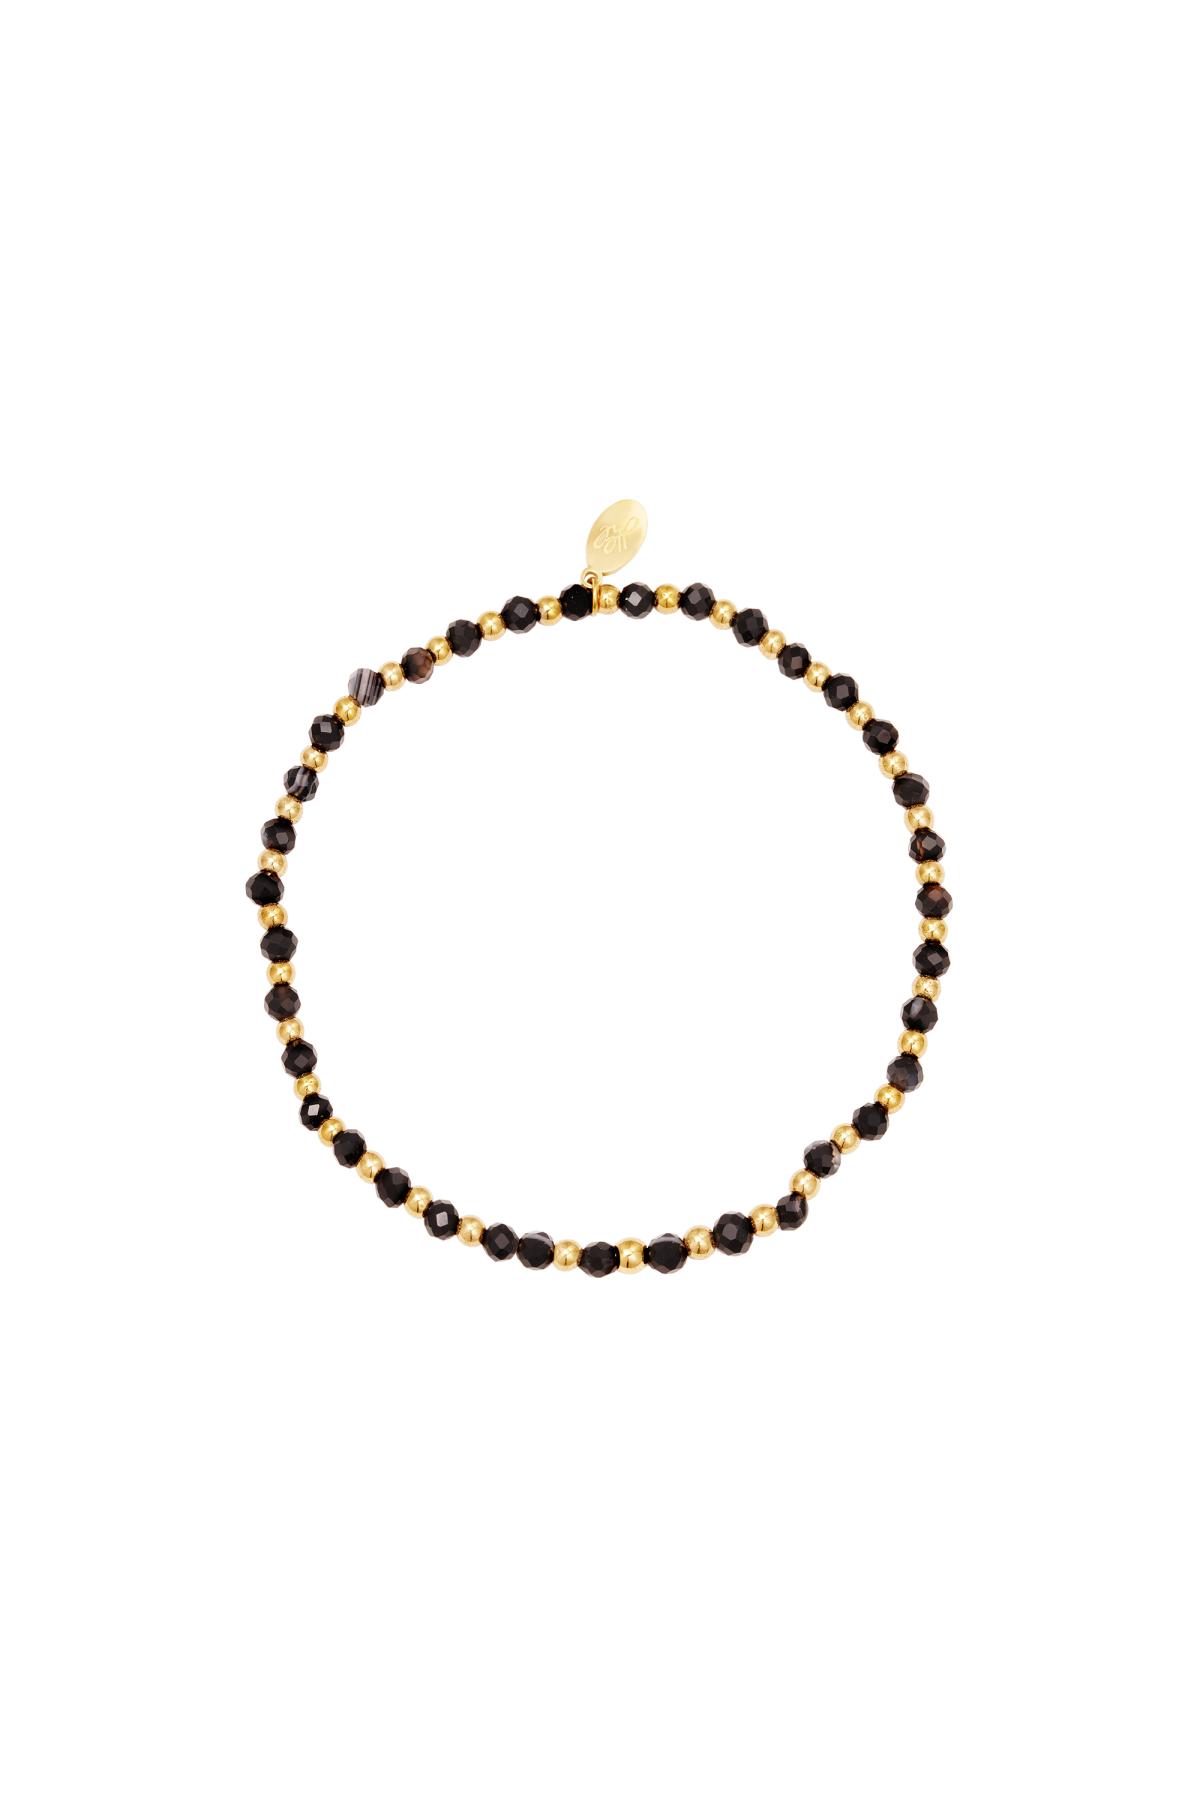 Bracelet colored beads Black agate 